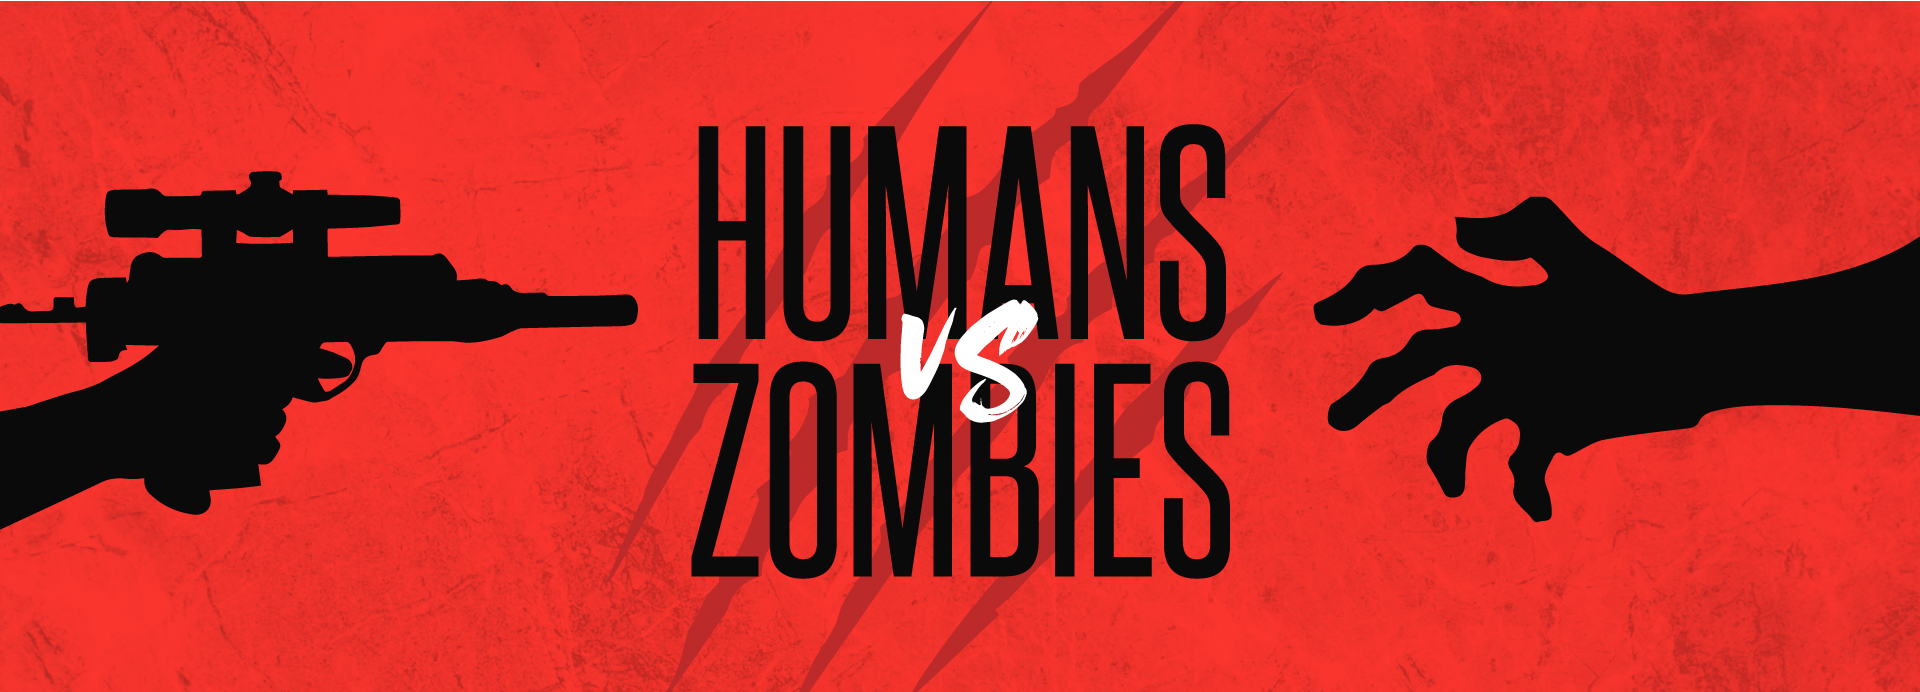 Humans VS Zombies Artwork 1920 X 692 